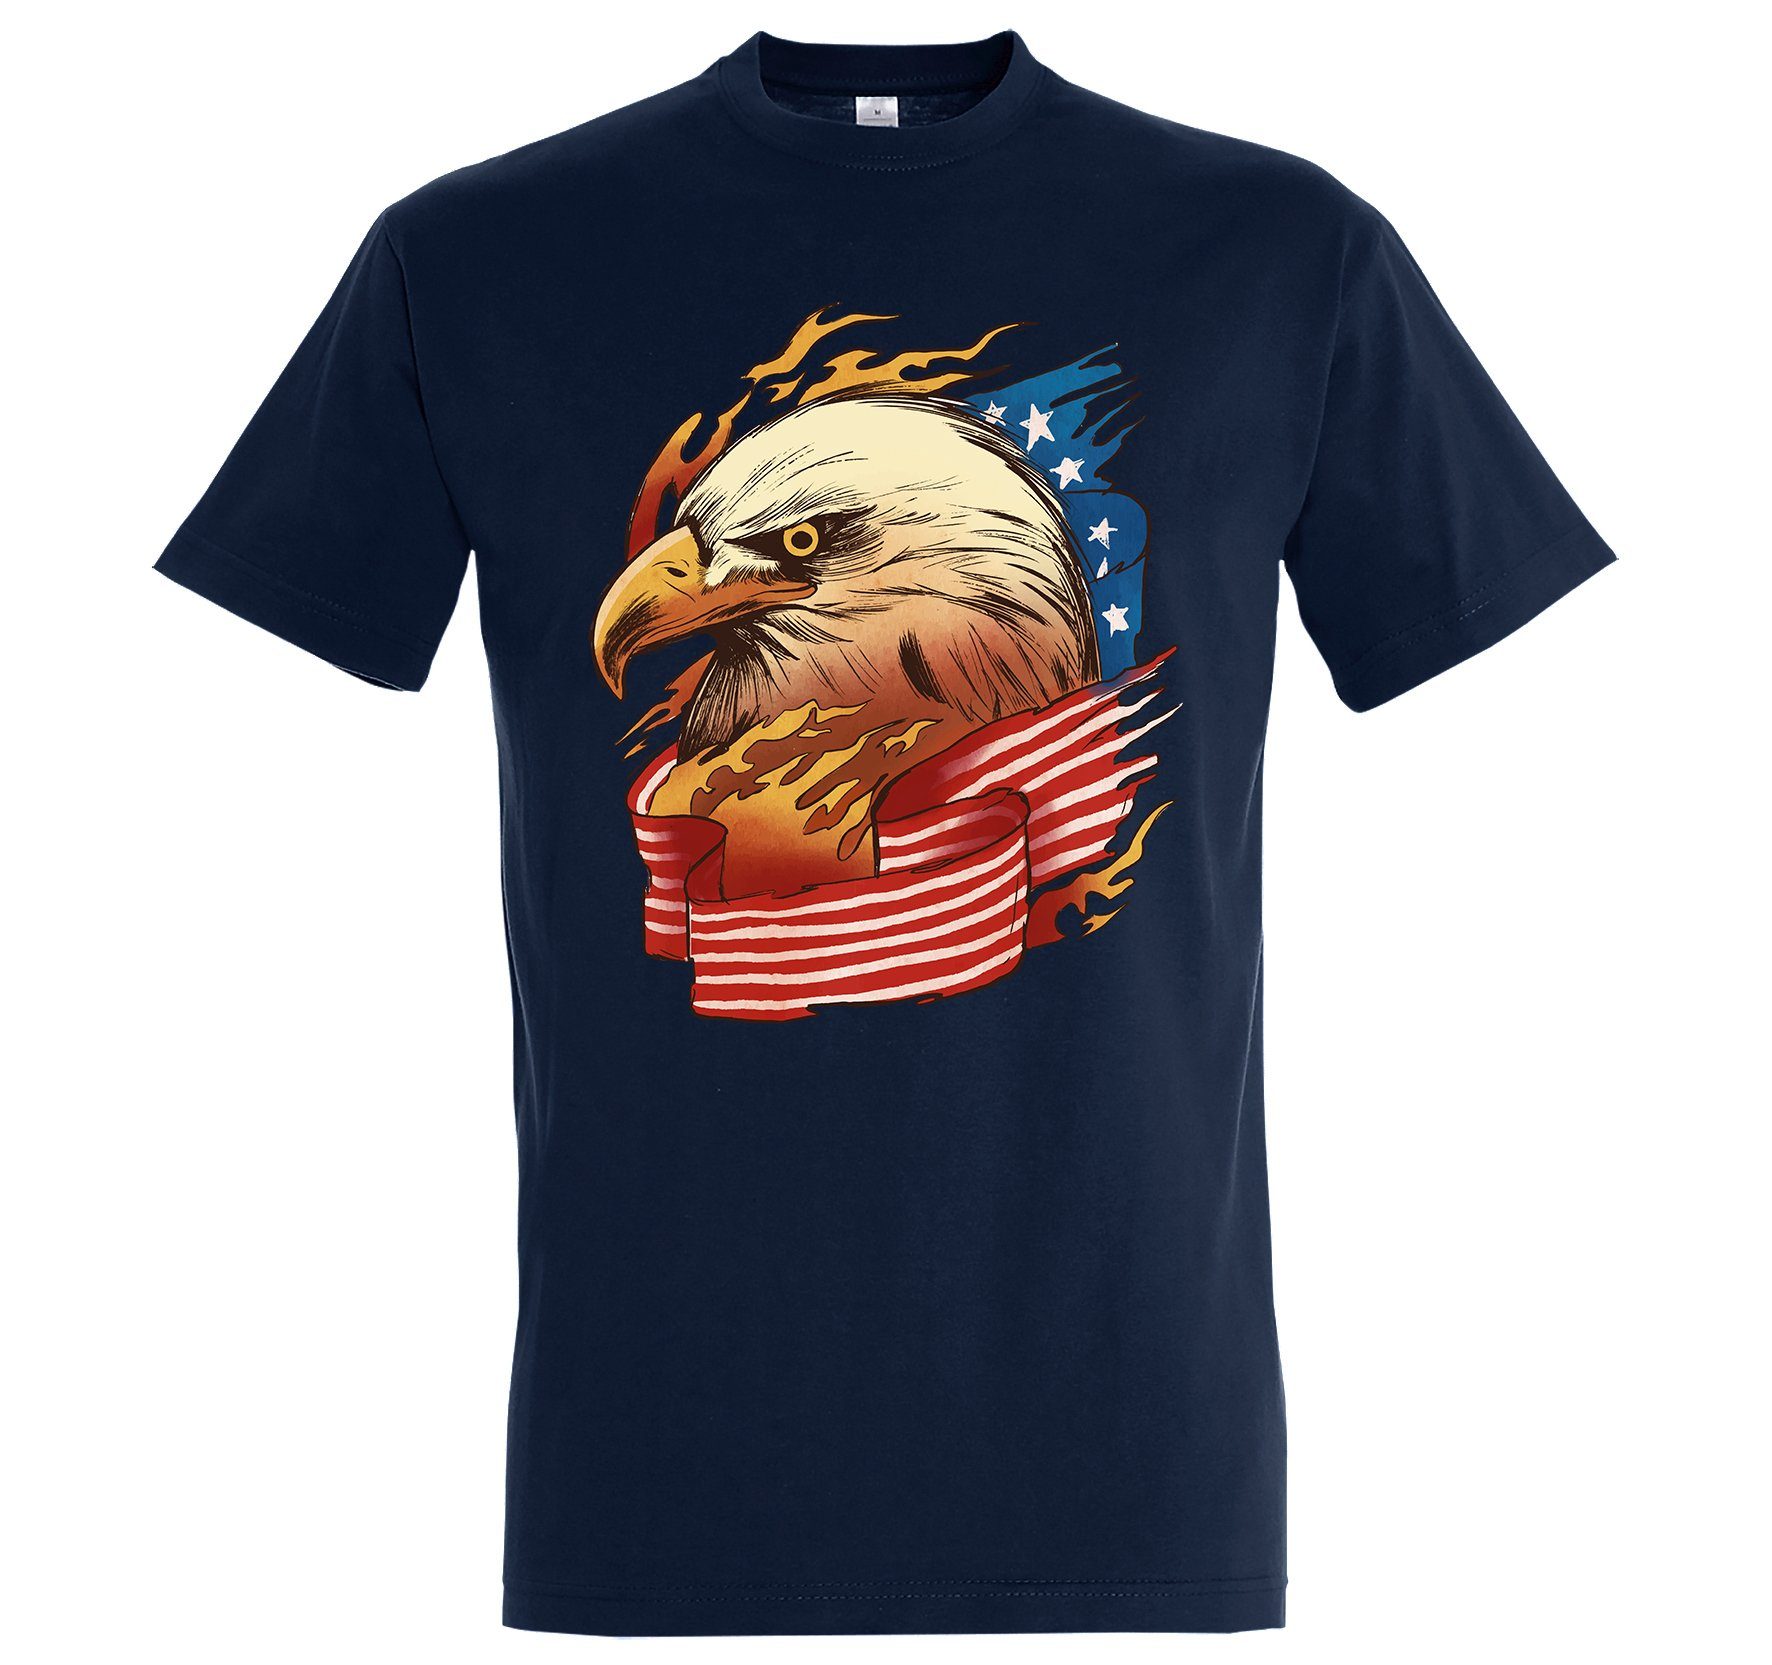 Adler Flagge Youth American Designz USA Eagle Frontprint trendigem mit T-Shirt Navyblau Shirt Herren